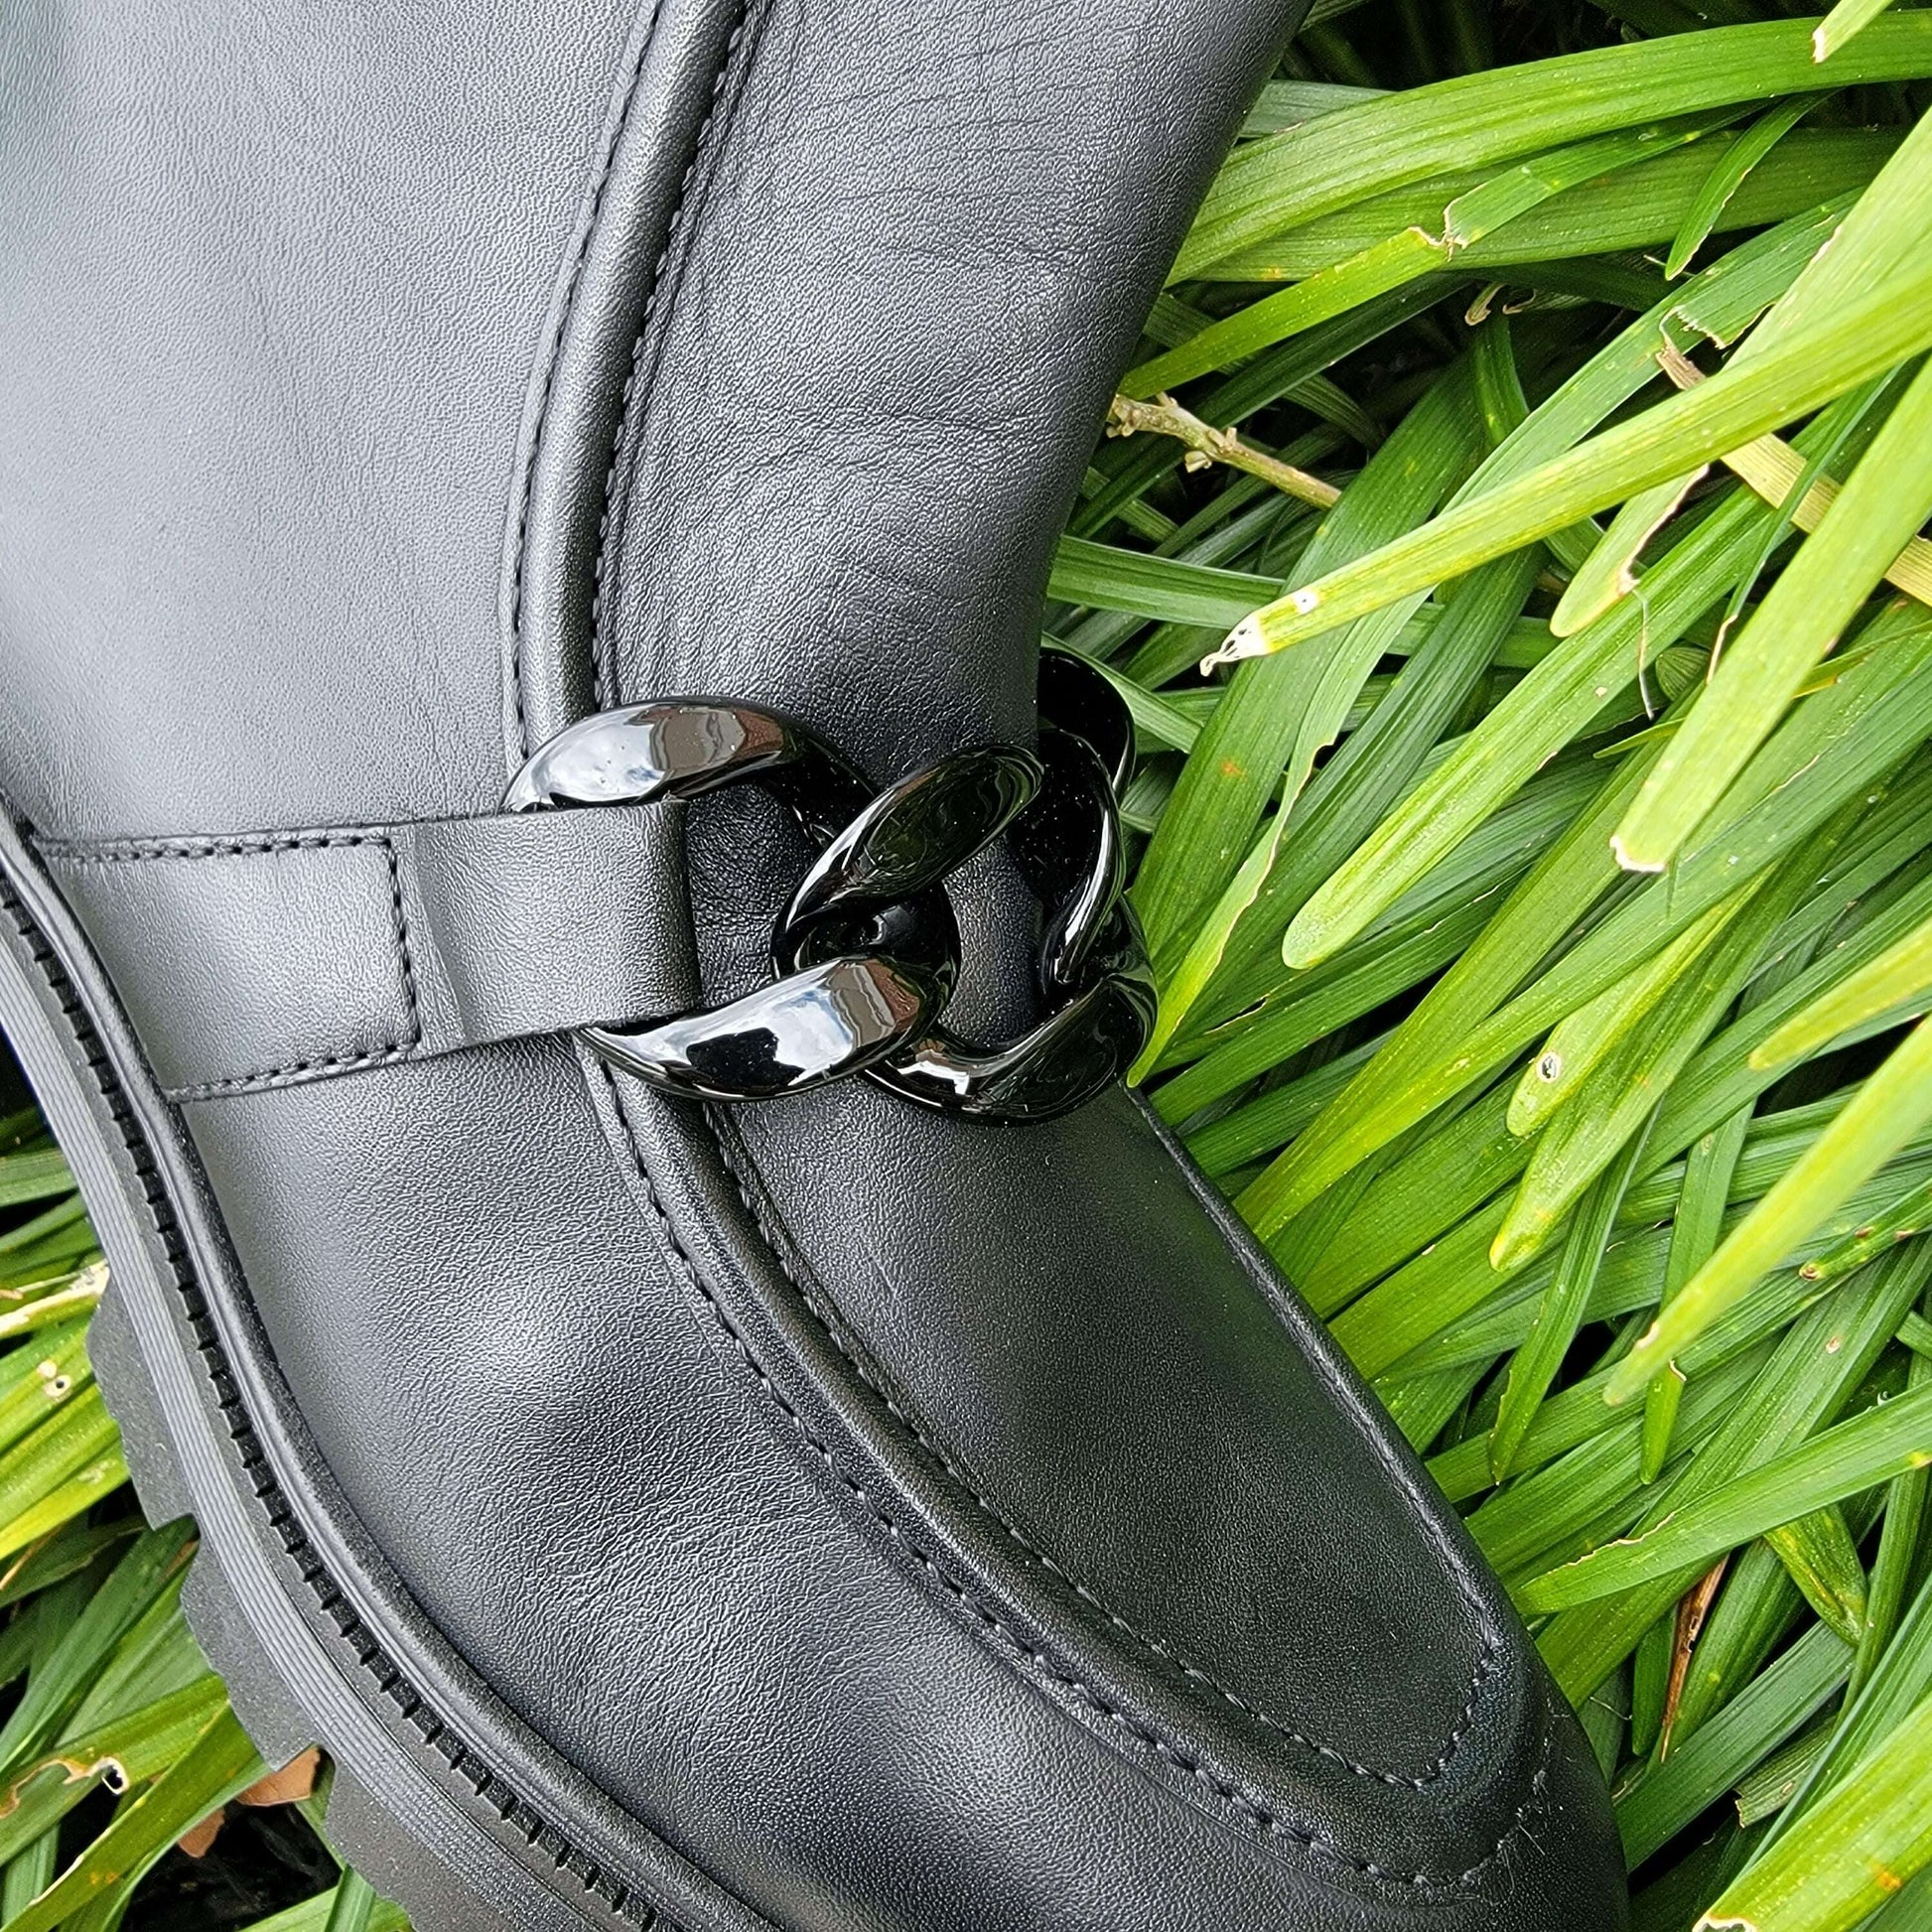 GABOR - 32.814.57 - Black Leather Boot, SHOES, Gabor, Plum Bottom